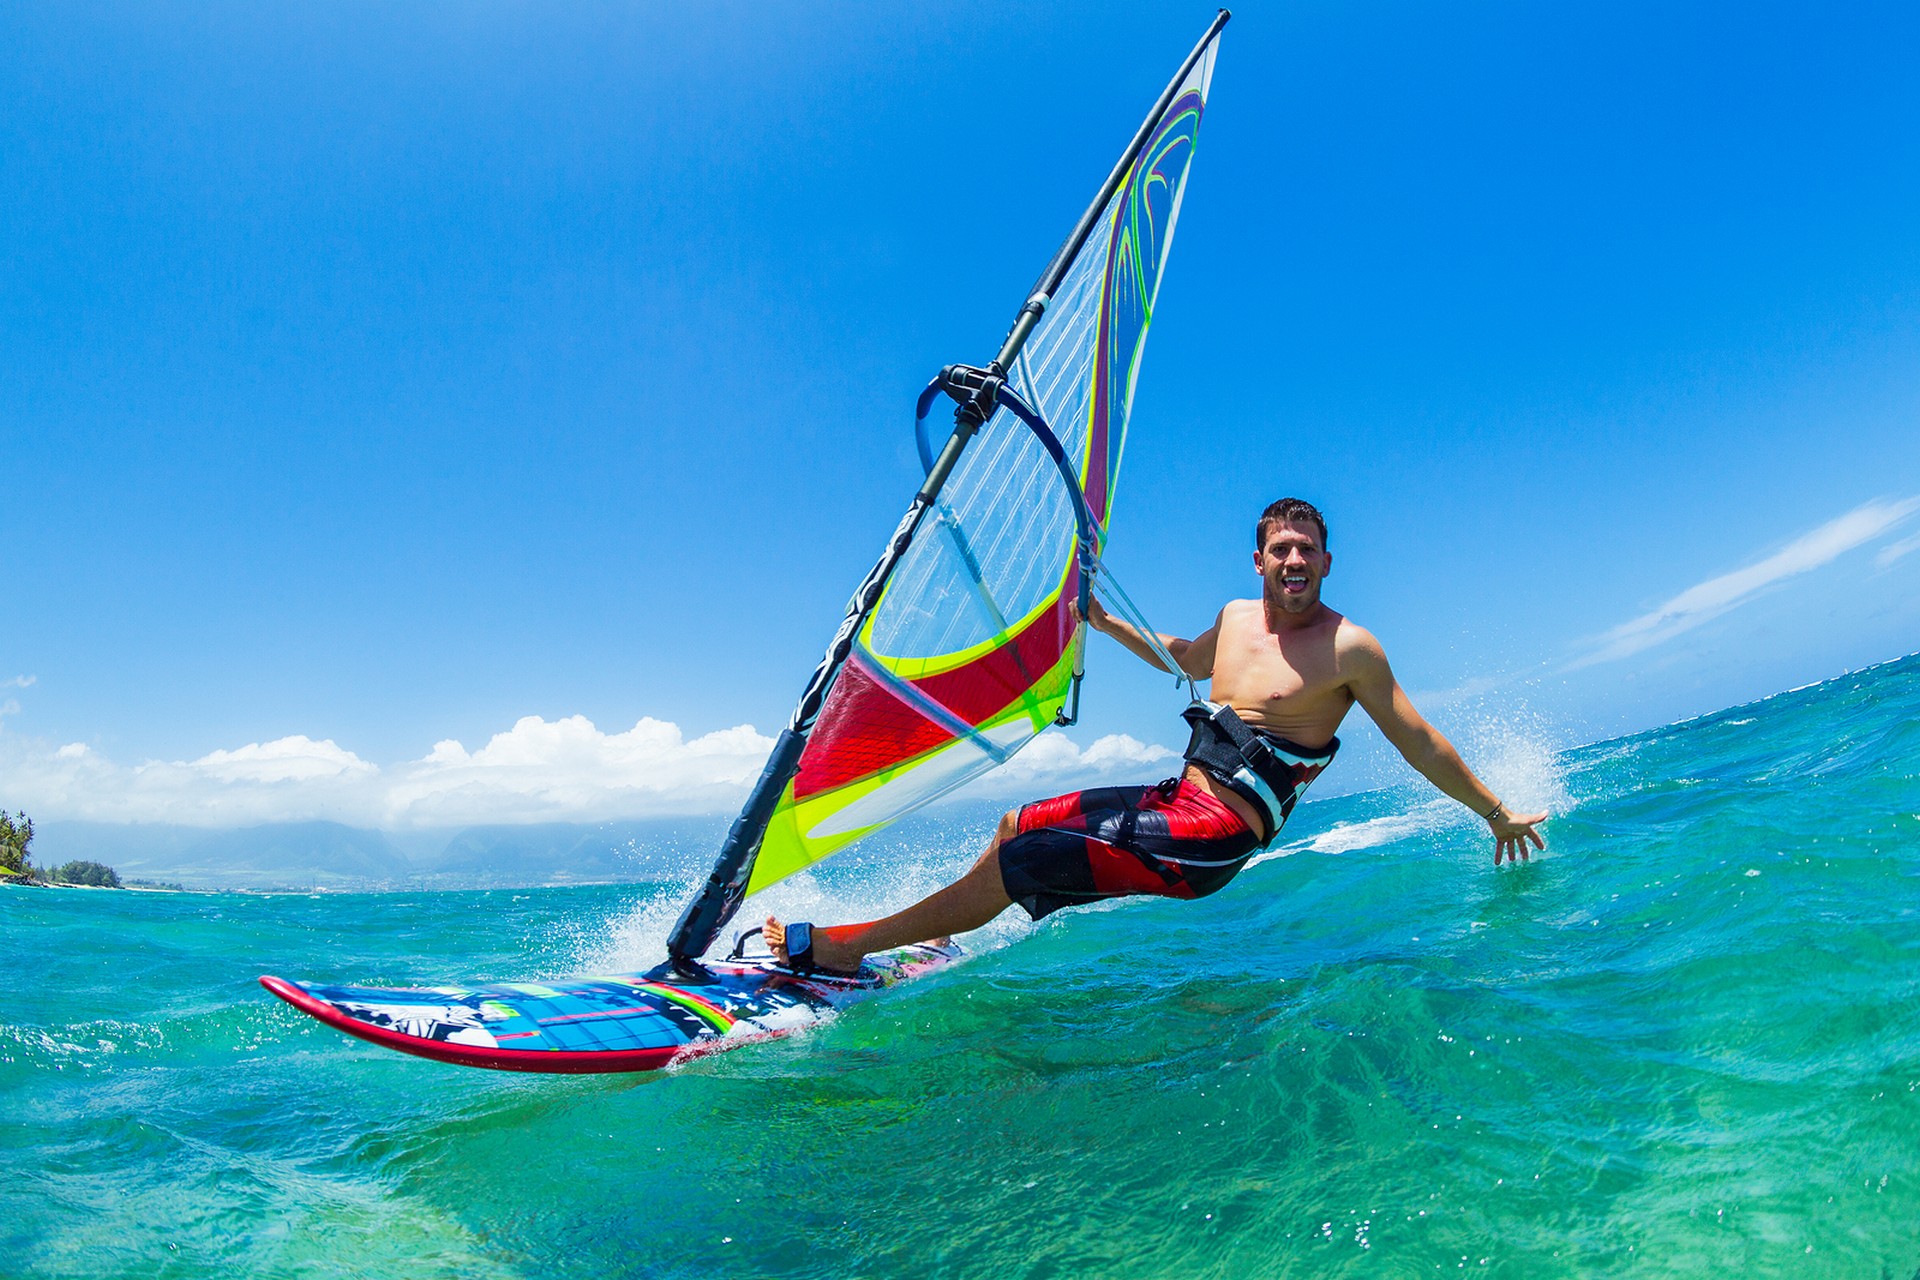 Escuela El Molino in Argentina, South America | Surfing,Kitesurfing,Windsurfing - Rated 1.6